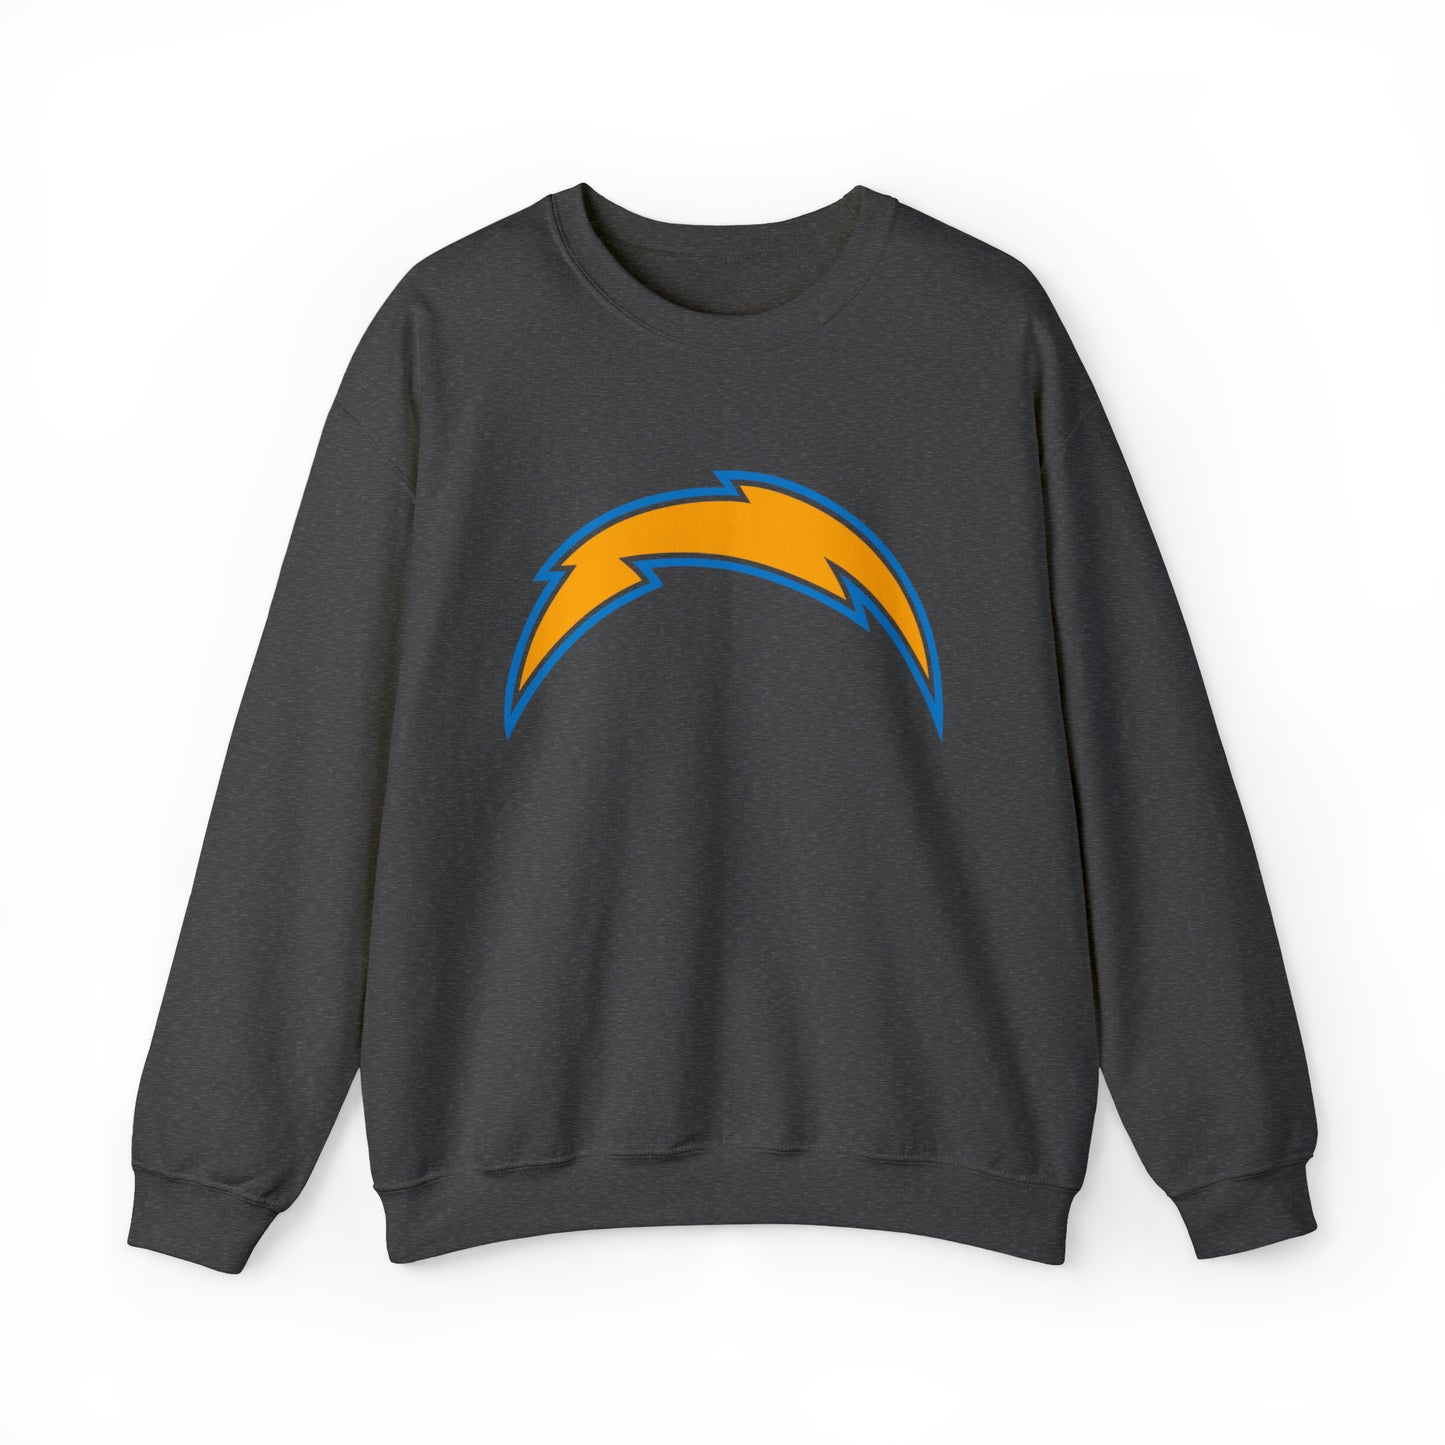 Throwback Los Angeles Chargers Crewneck Sweatshirt - Vintage California Football Sheep Style Apparel - Design 1